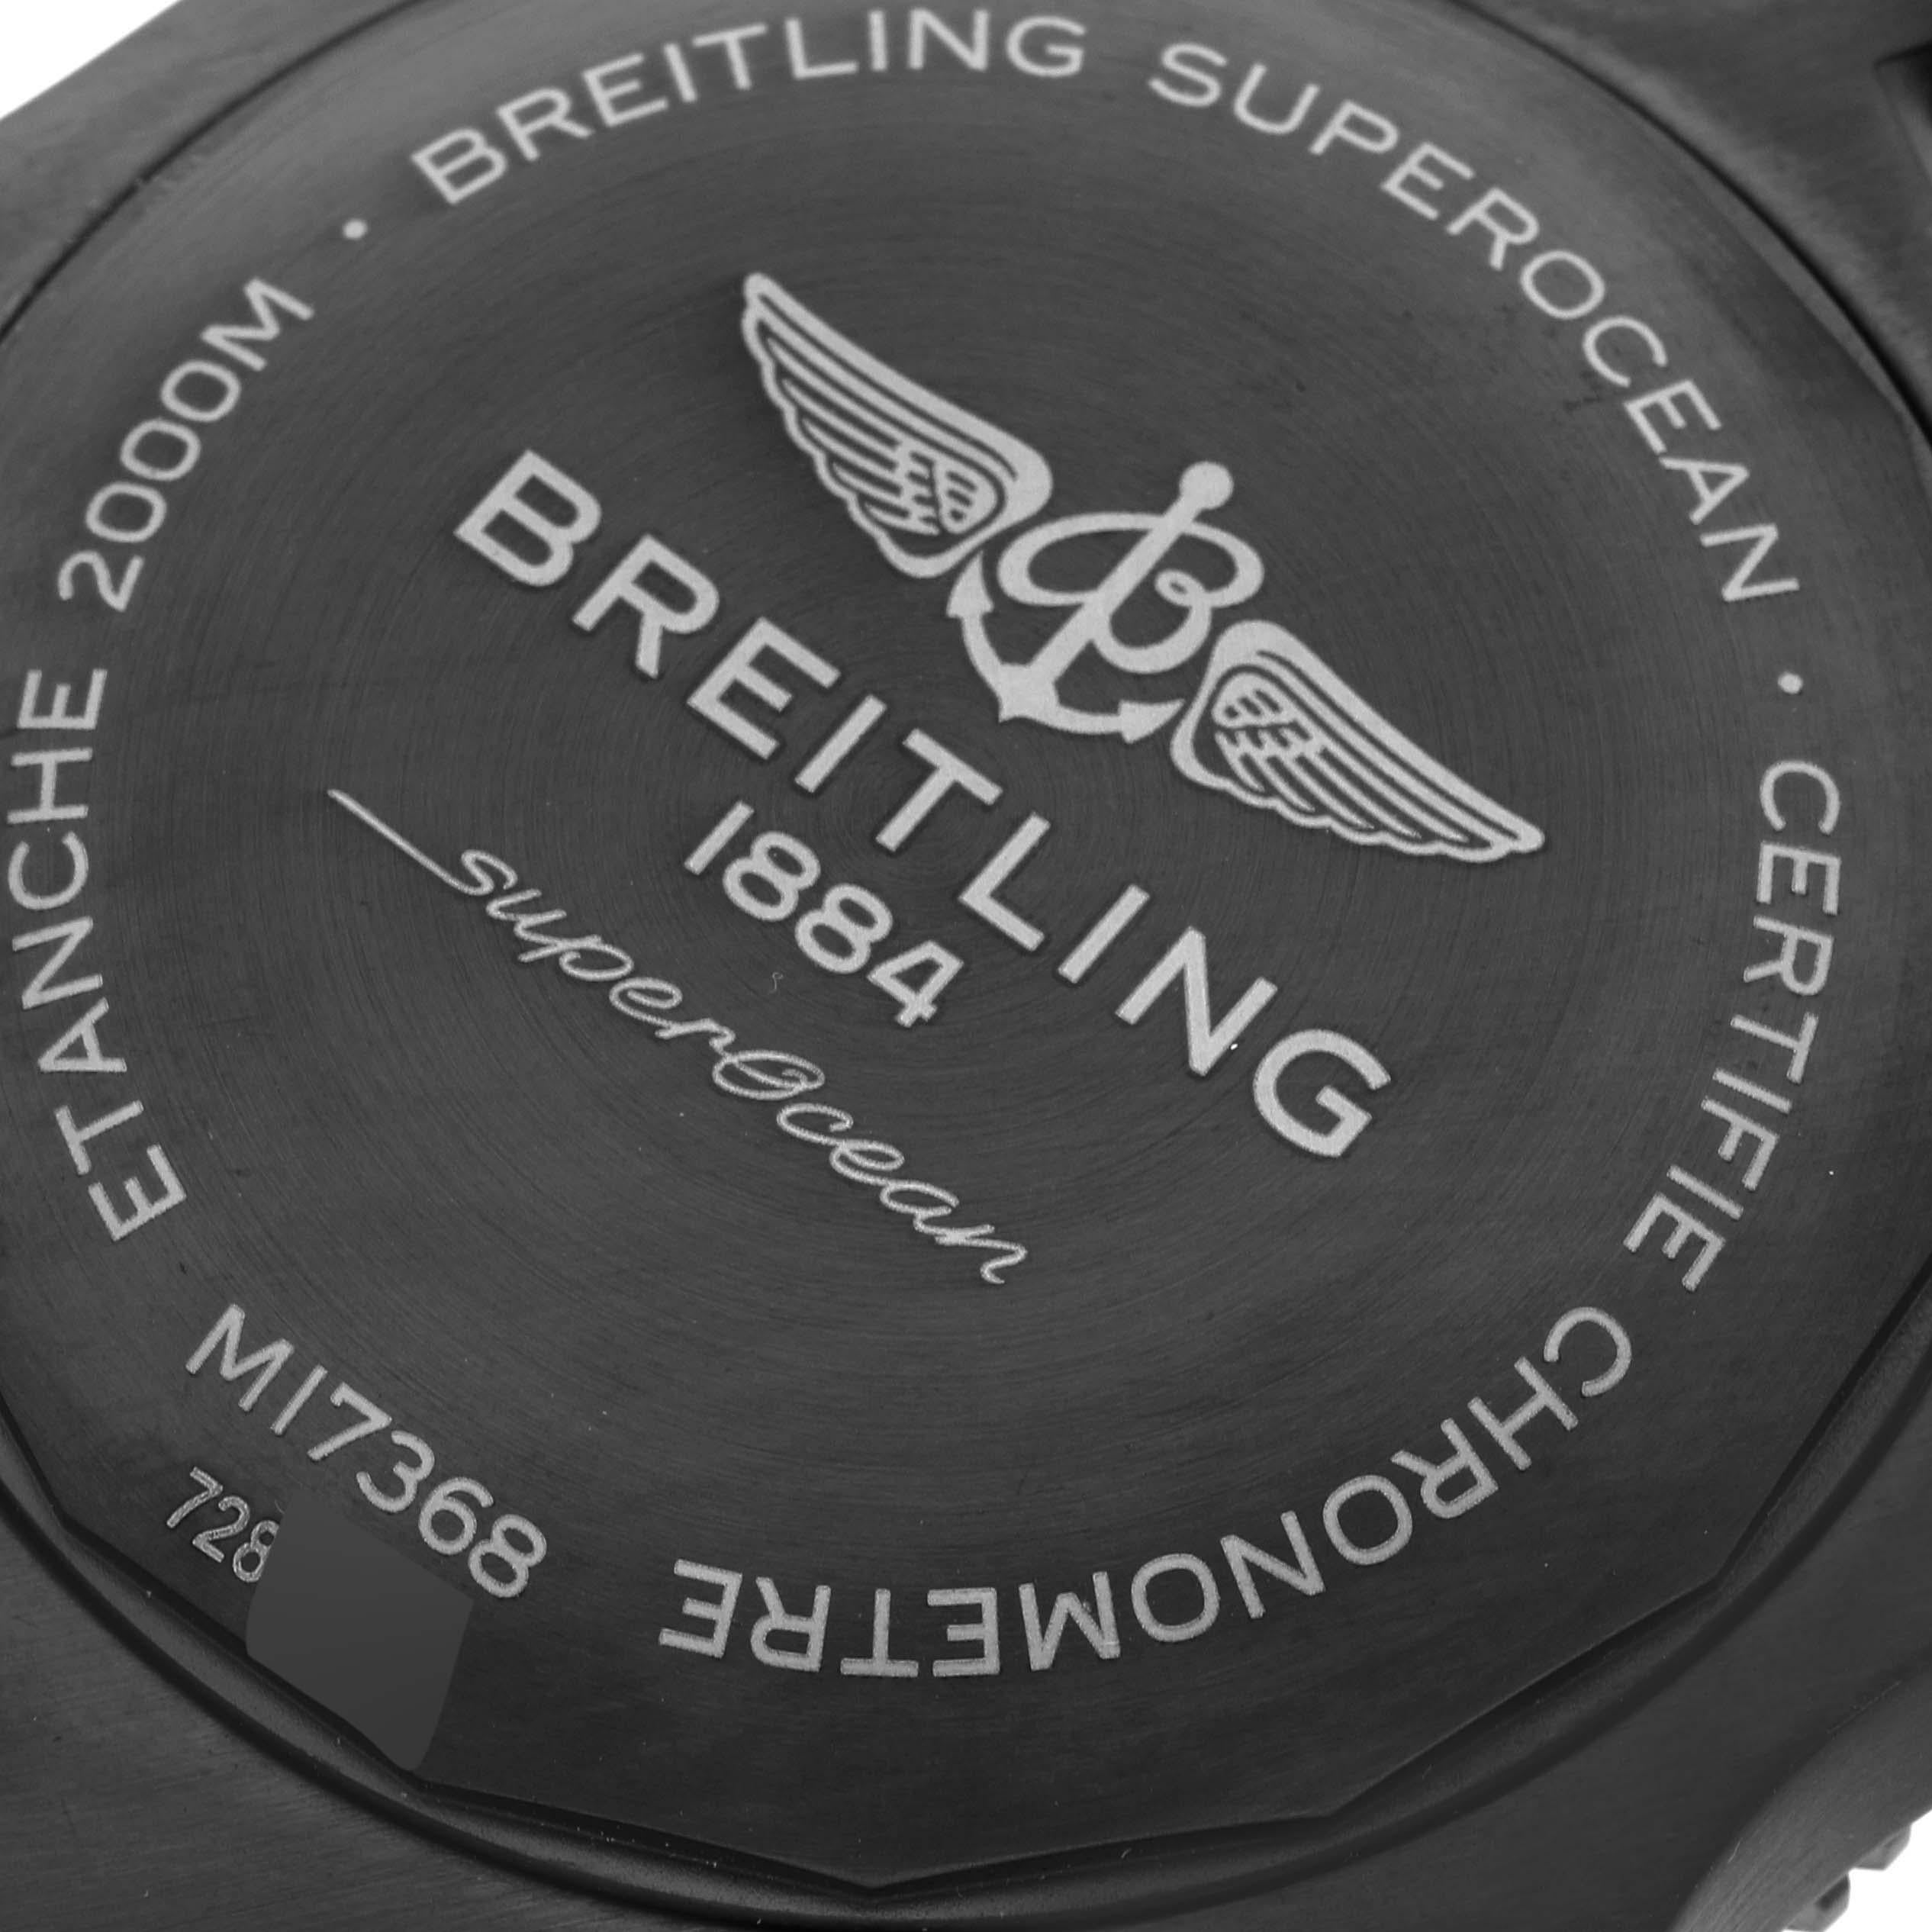 Breitling Superocean 46 Black Dial DLC Steel Mens Watch M17368 Box Card For Sale 3